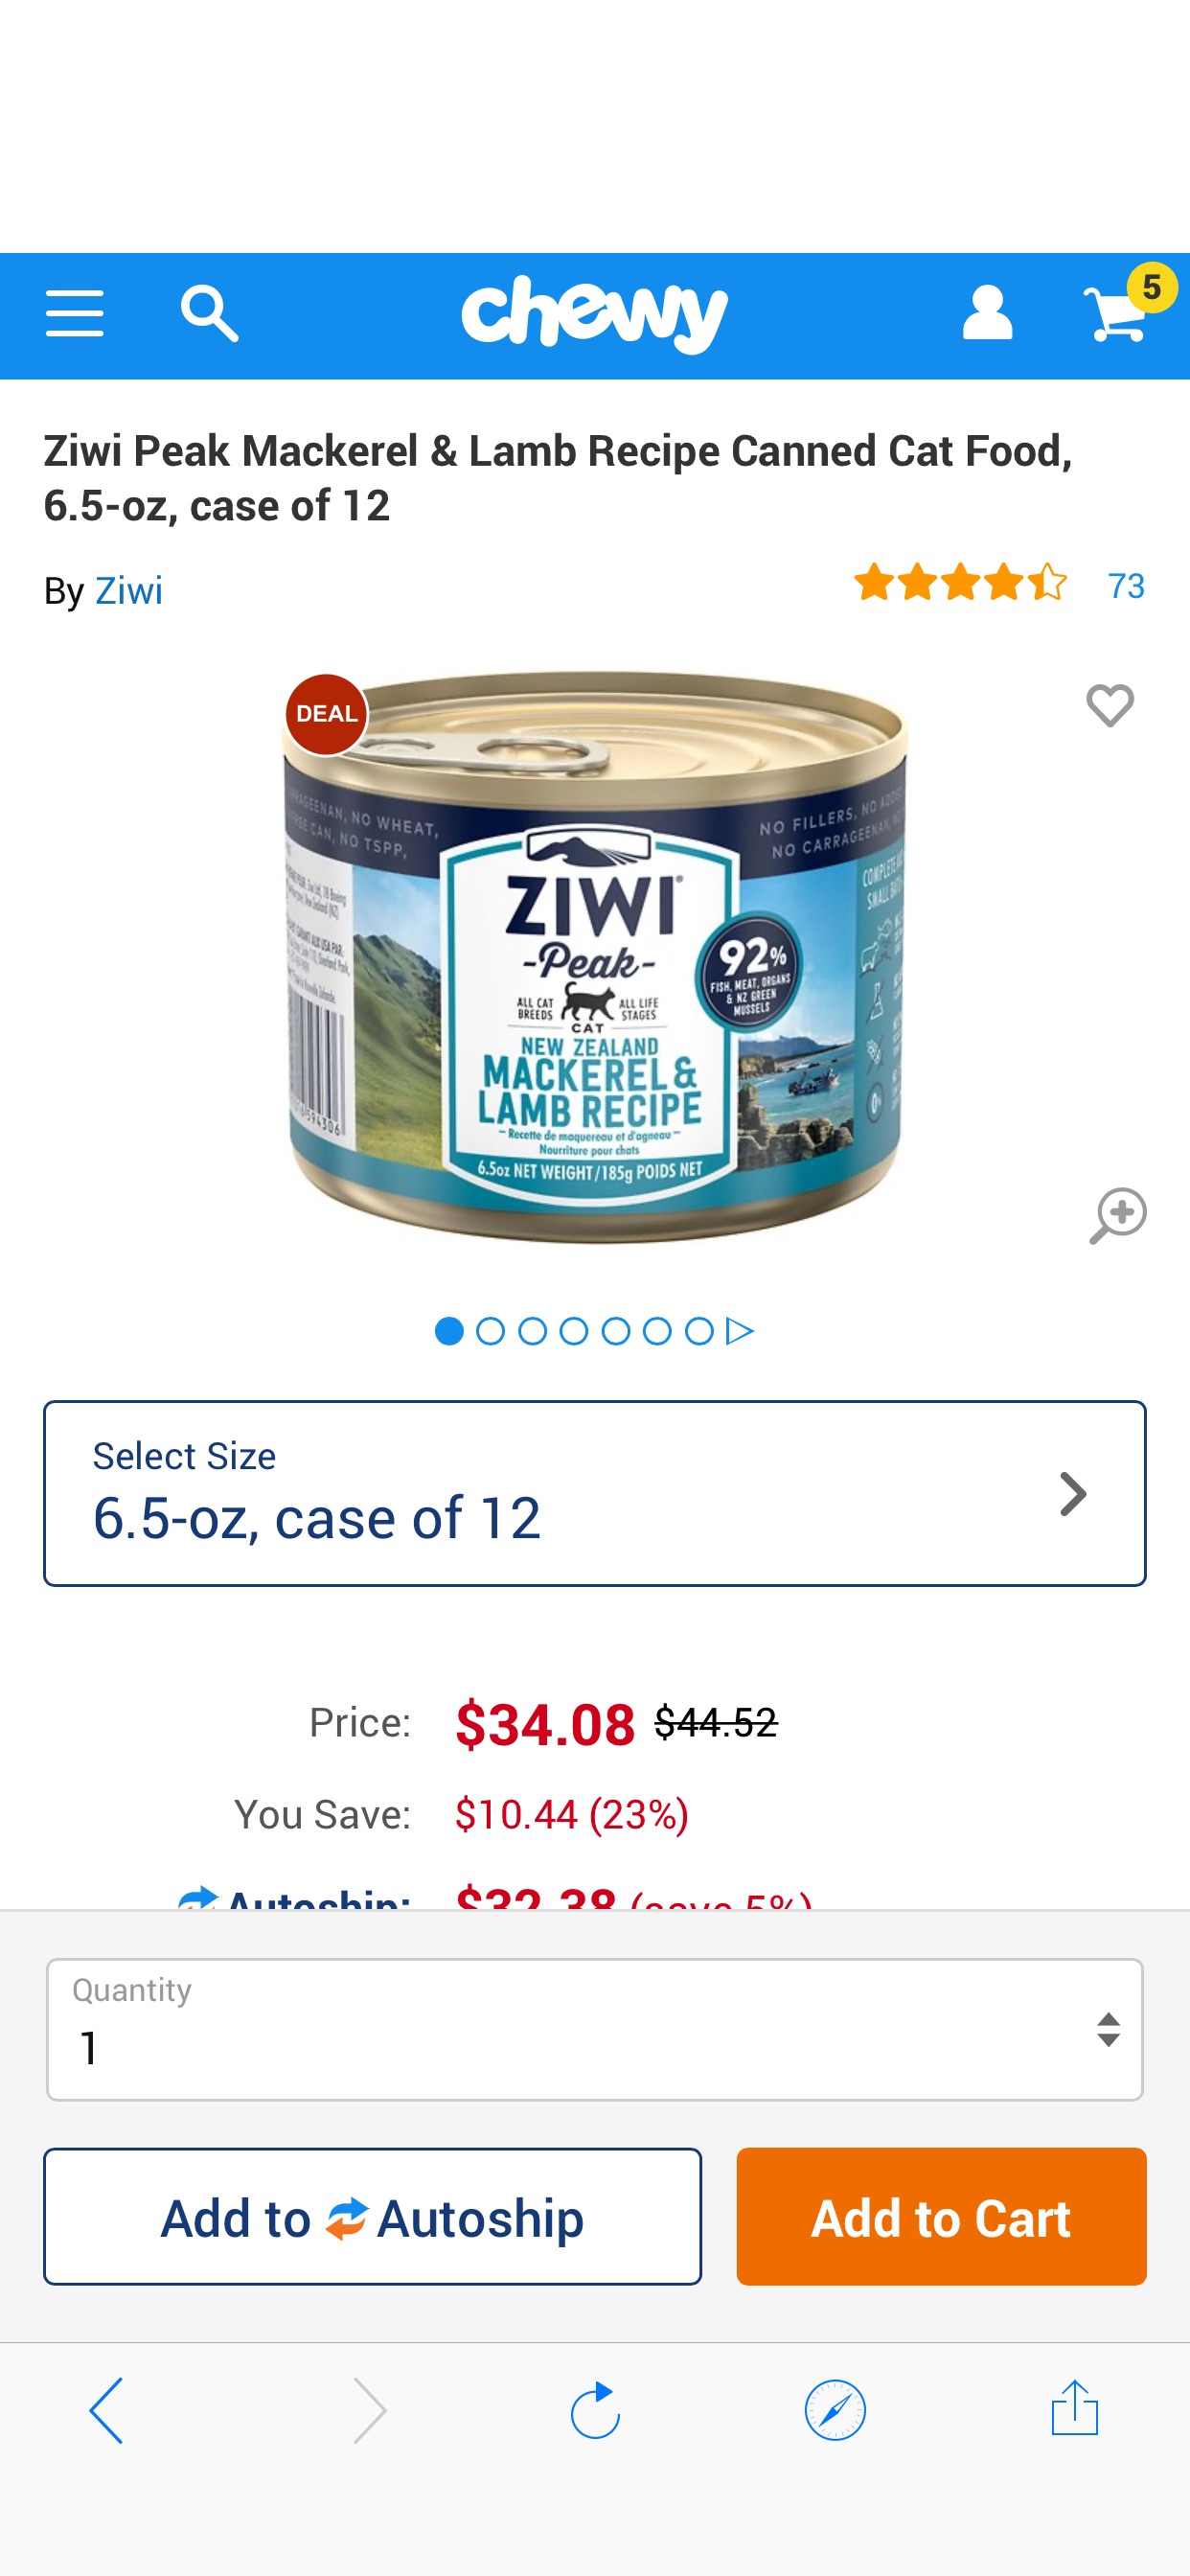 巅峰马鲛鱼羊肉主食罐头Ziwi Peak Mackerel & Lamb Recipe Canned Cat Food, 6.5-oz, case of 12 - Chewy.com